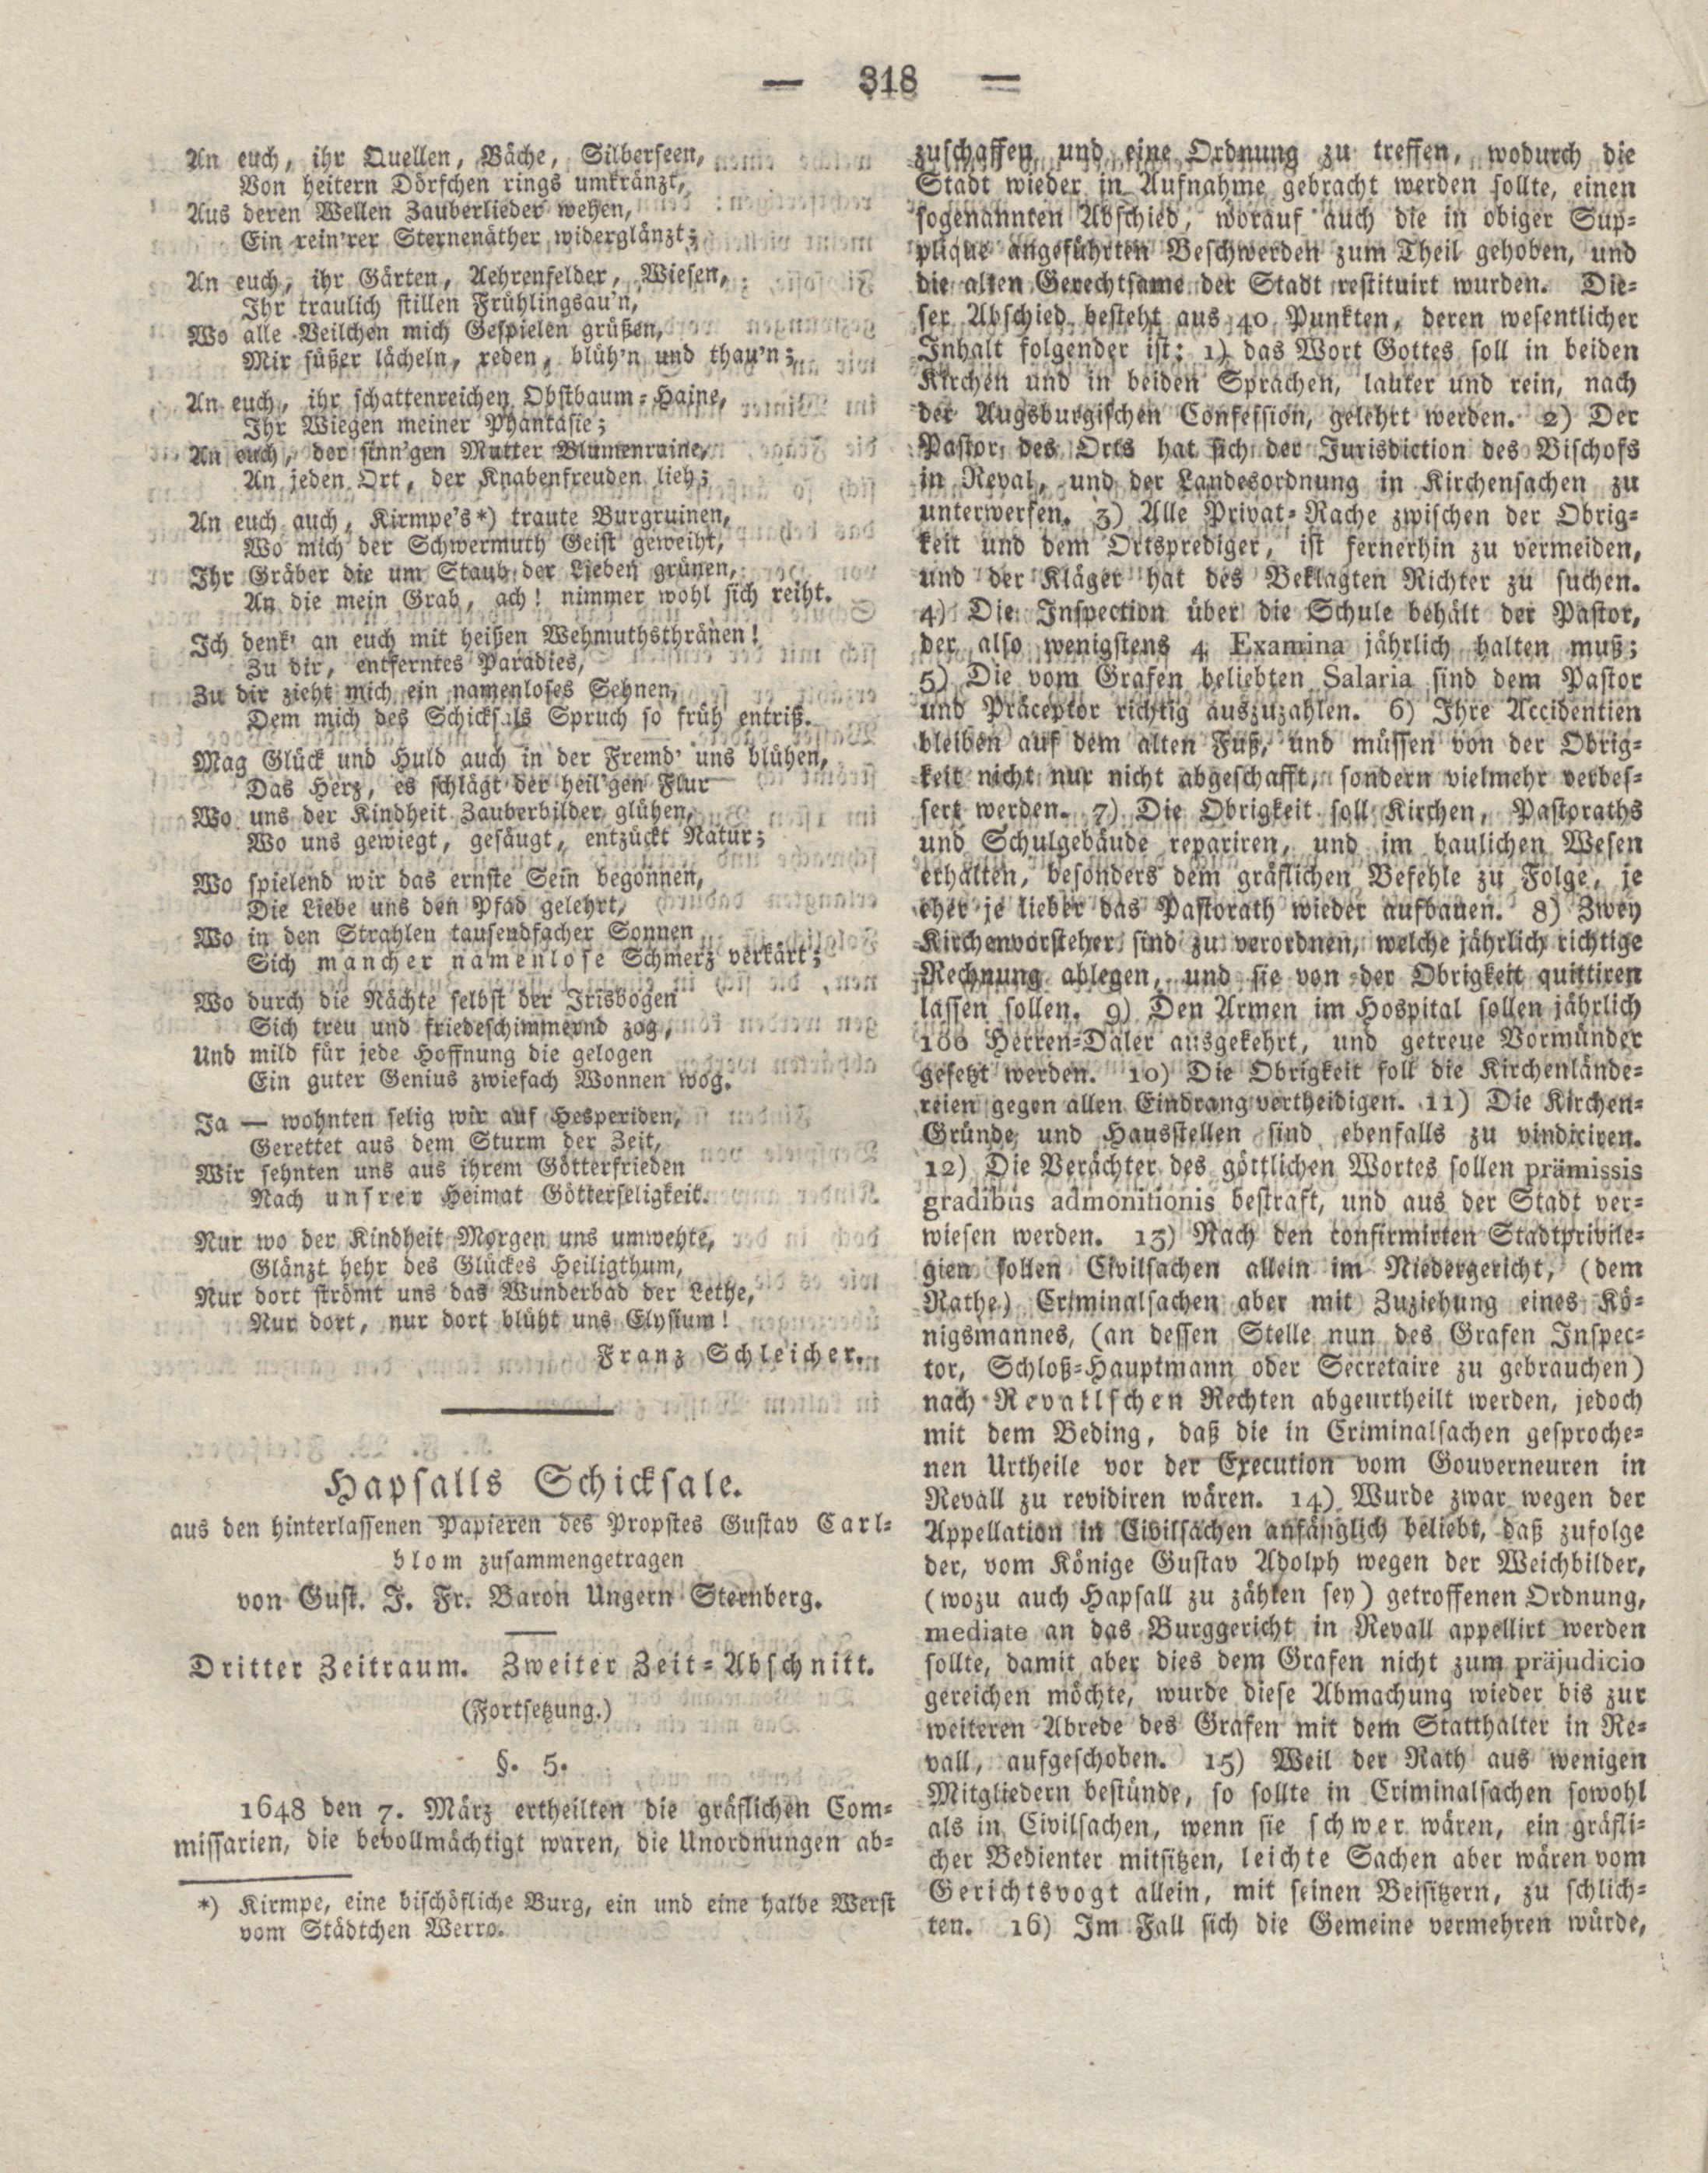 Hapsalls Schicksale [11] (1829) | 1. (318) Основной текст